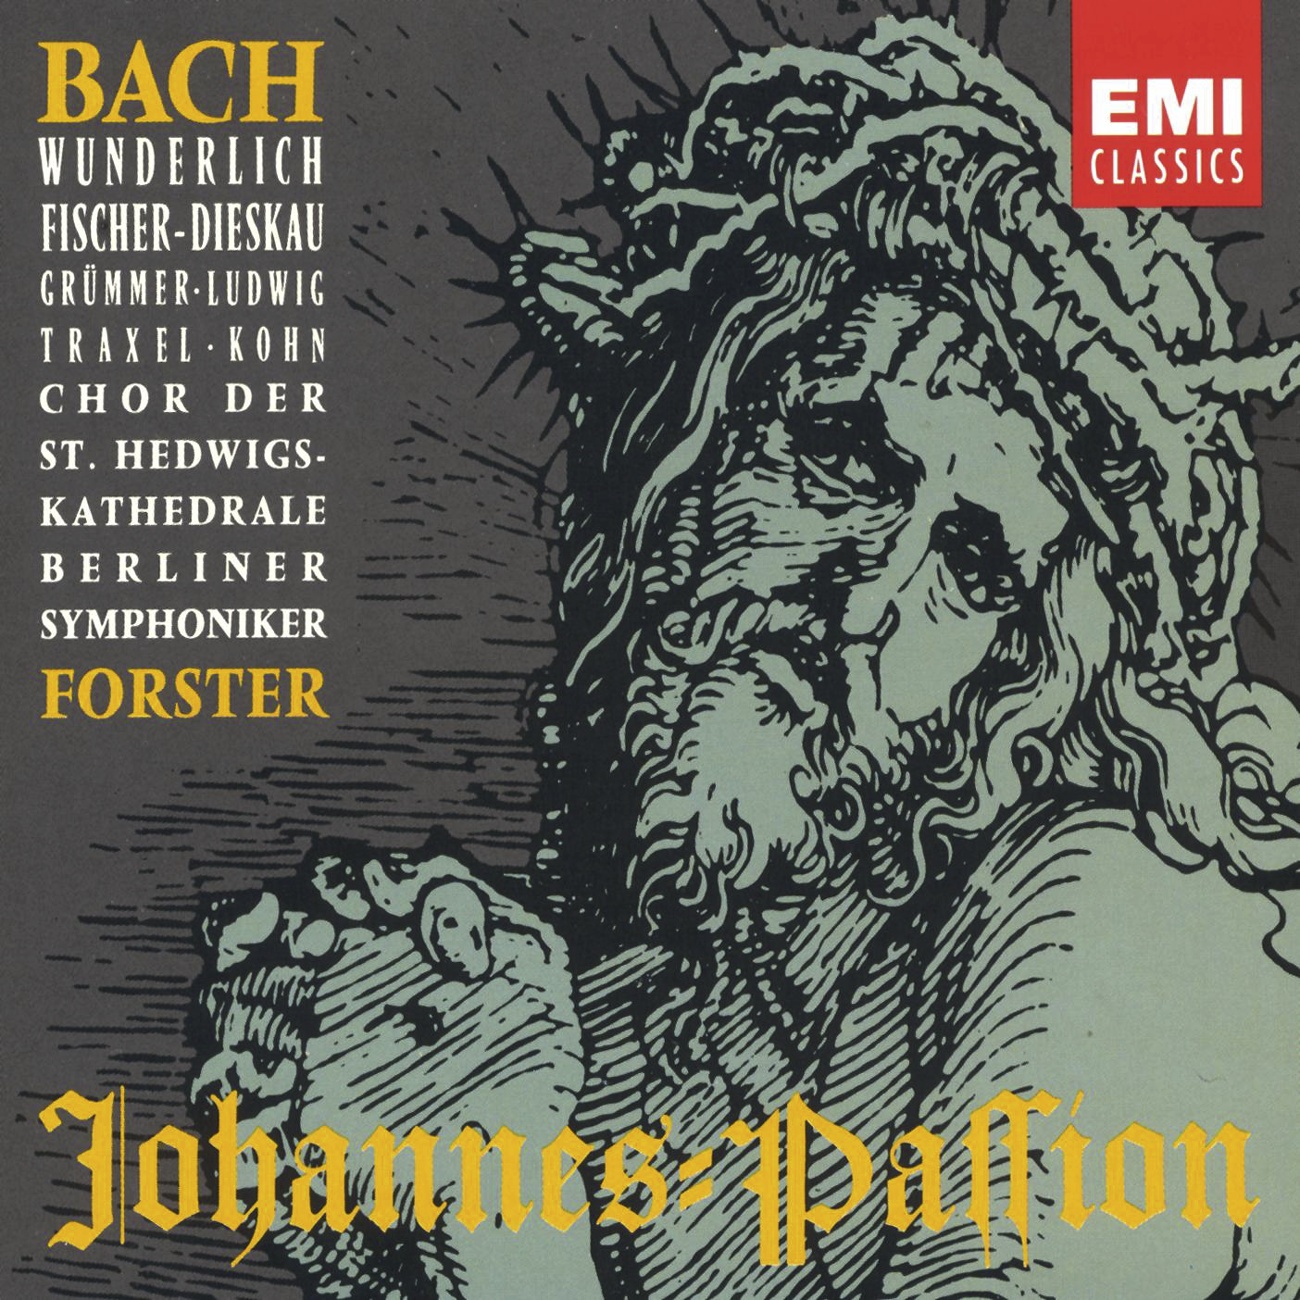 St. John Passion BWV 245 JohannesPassion, Second Part: Sei gegrü et Nr. 34: Chor